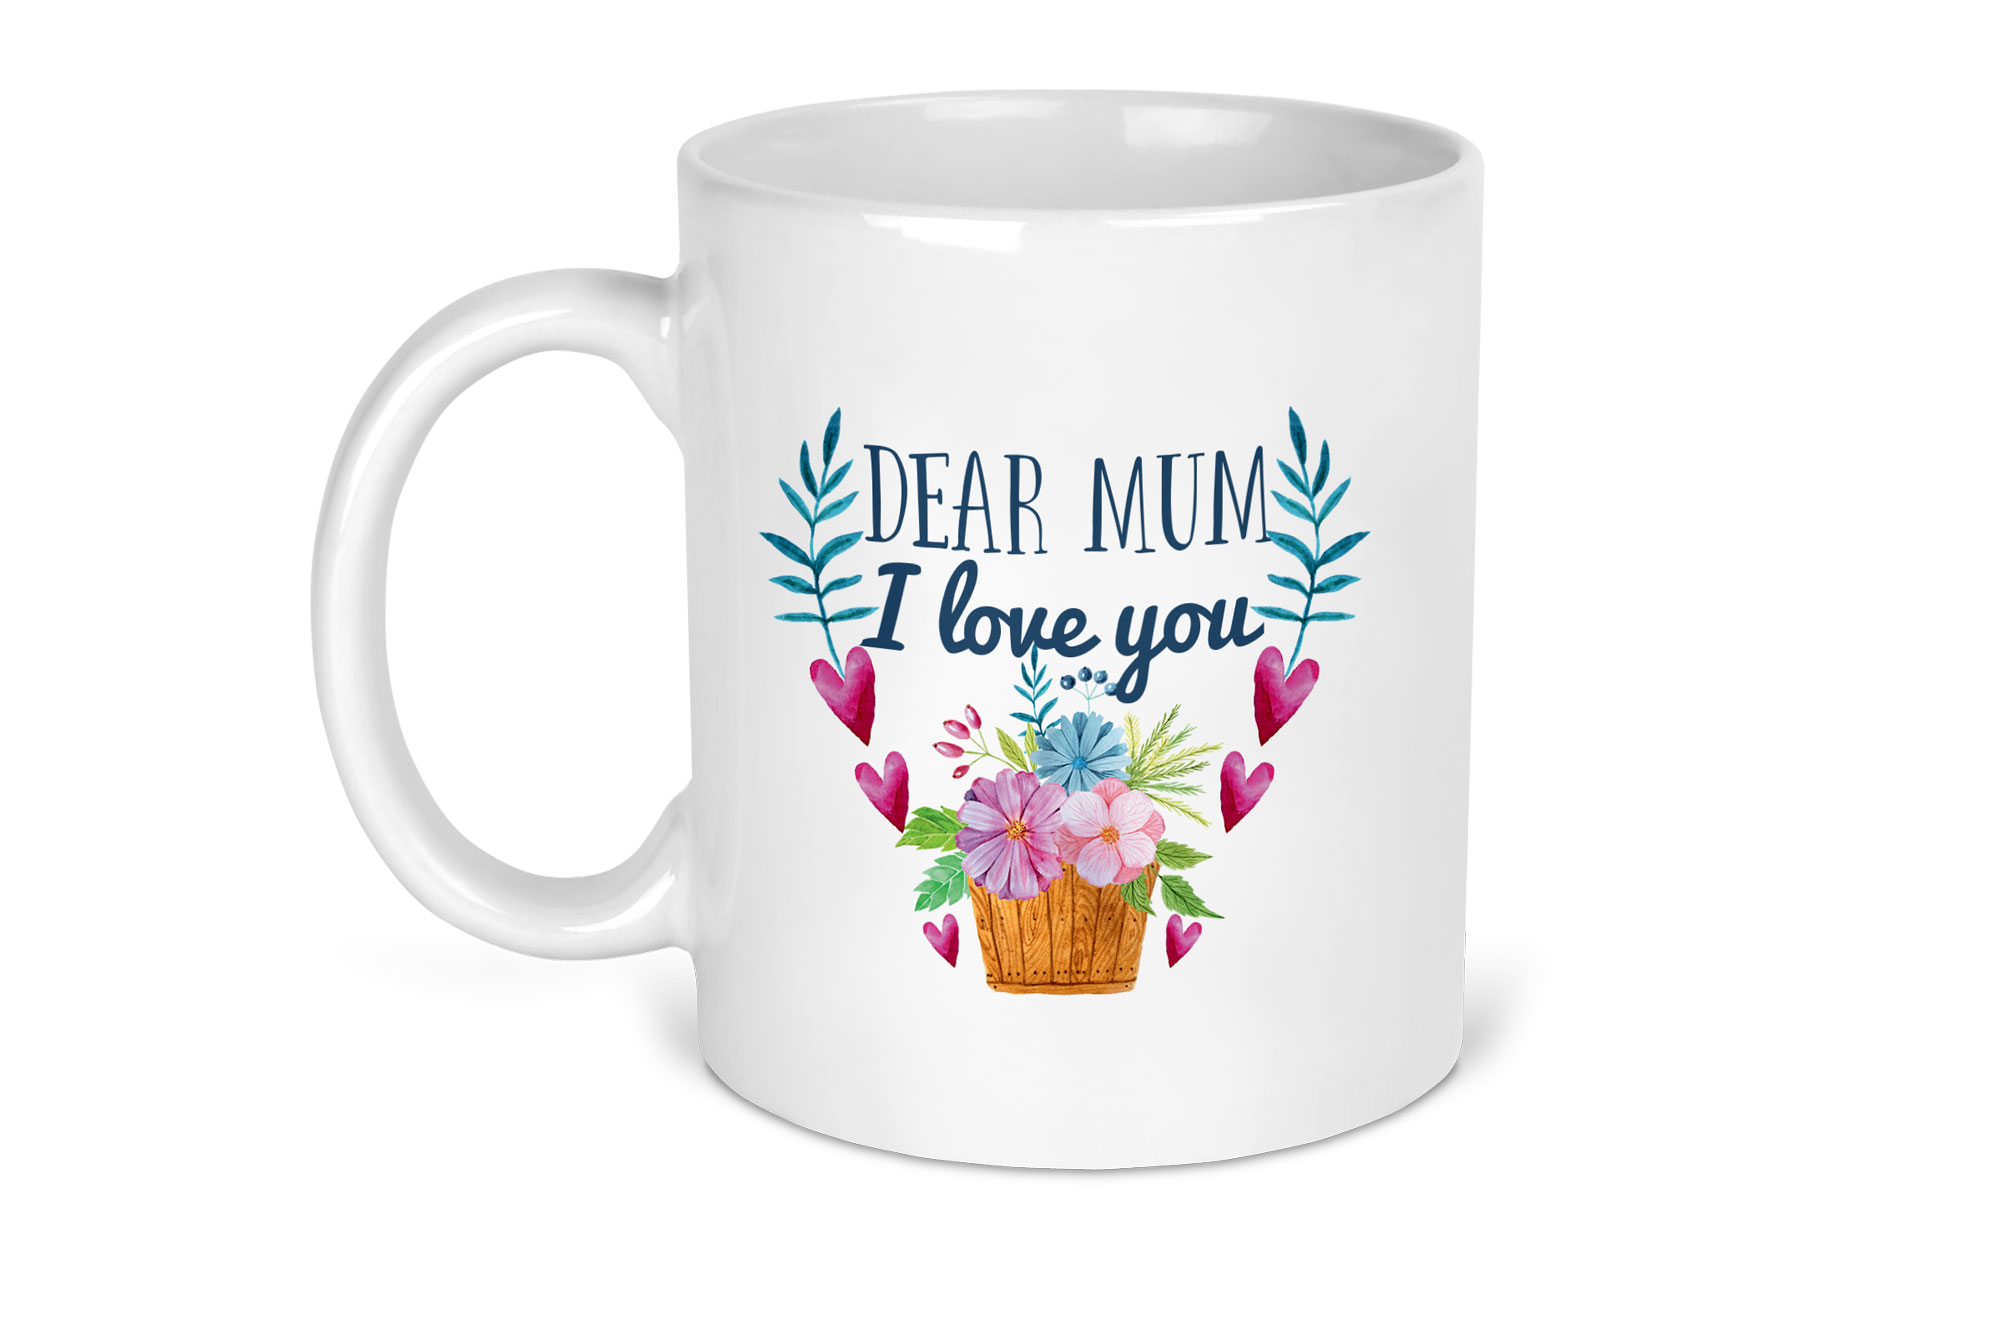 Dear mum i love you mug